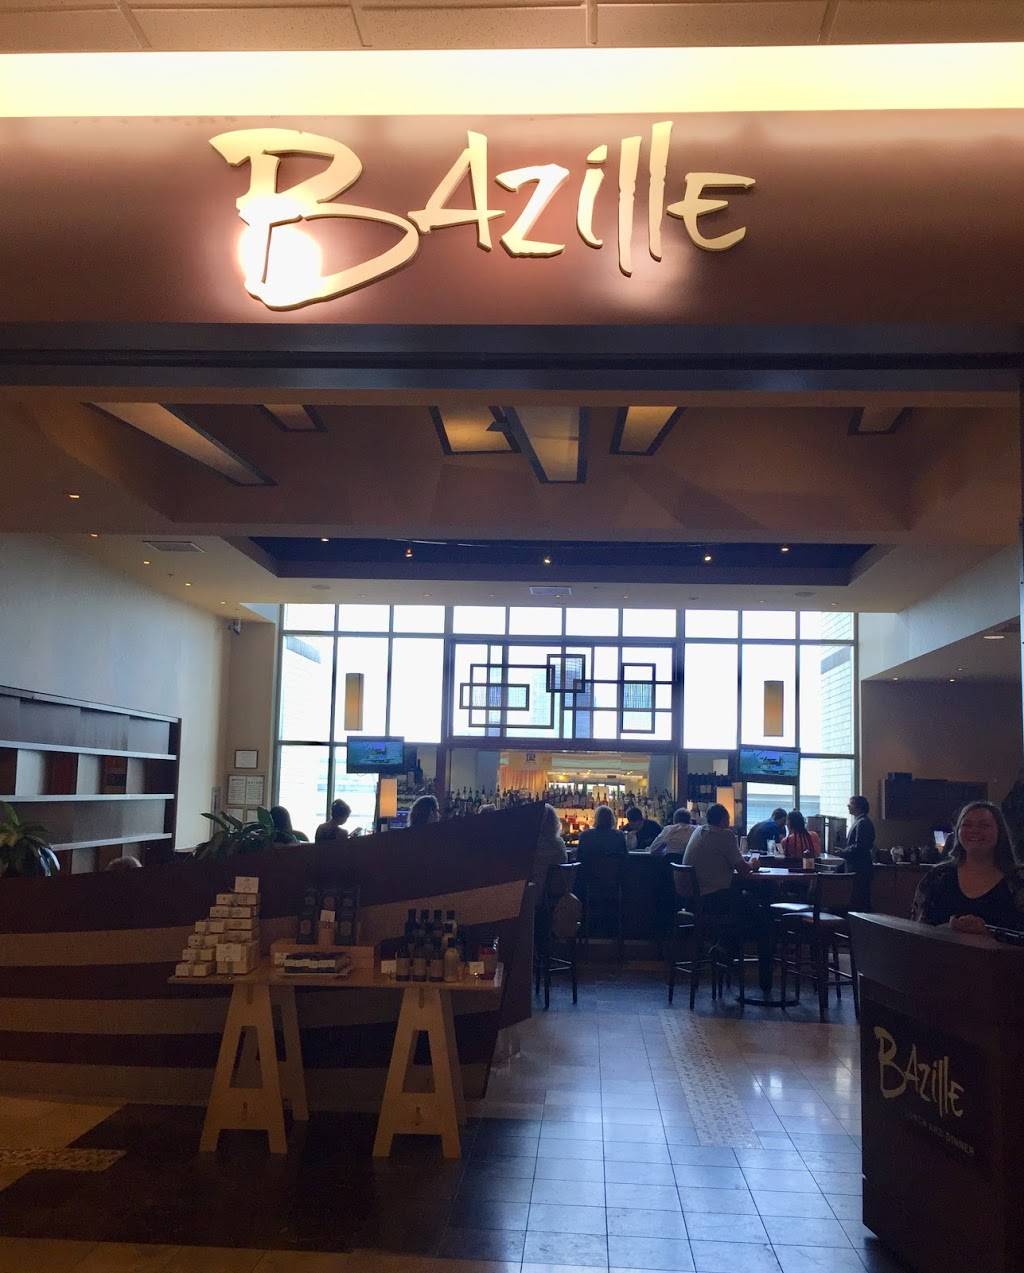 Bazille - Nordstrom NorthPark Center Restaurant - Dallas, TX